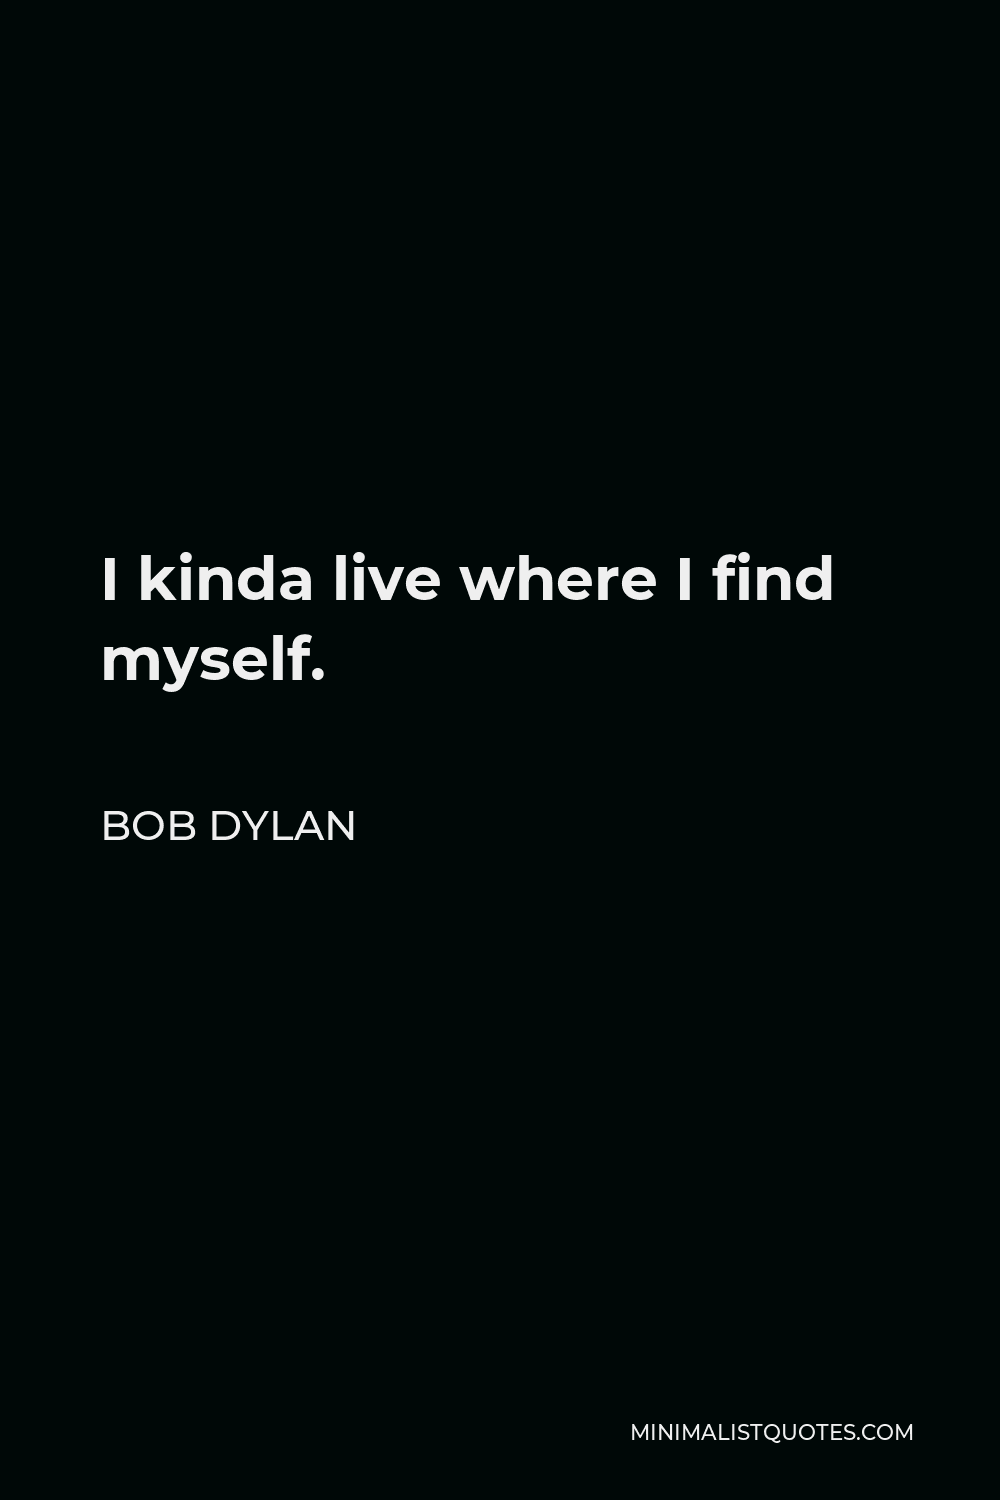 Bob Dylan Quote - I kinda live where I find myself.